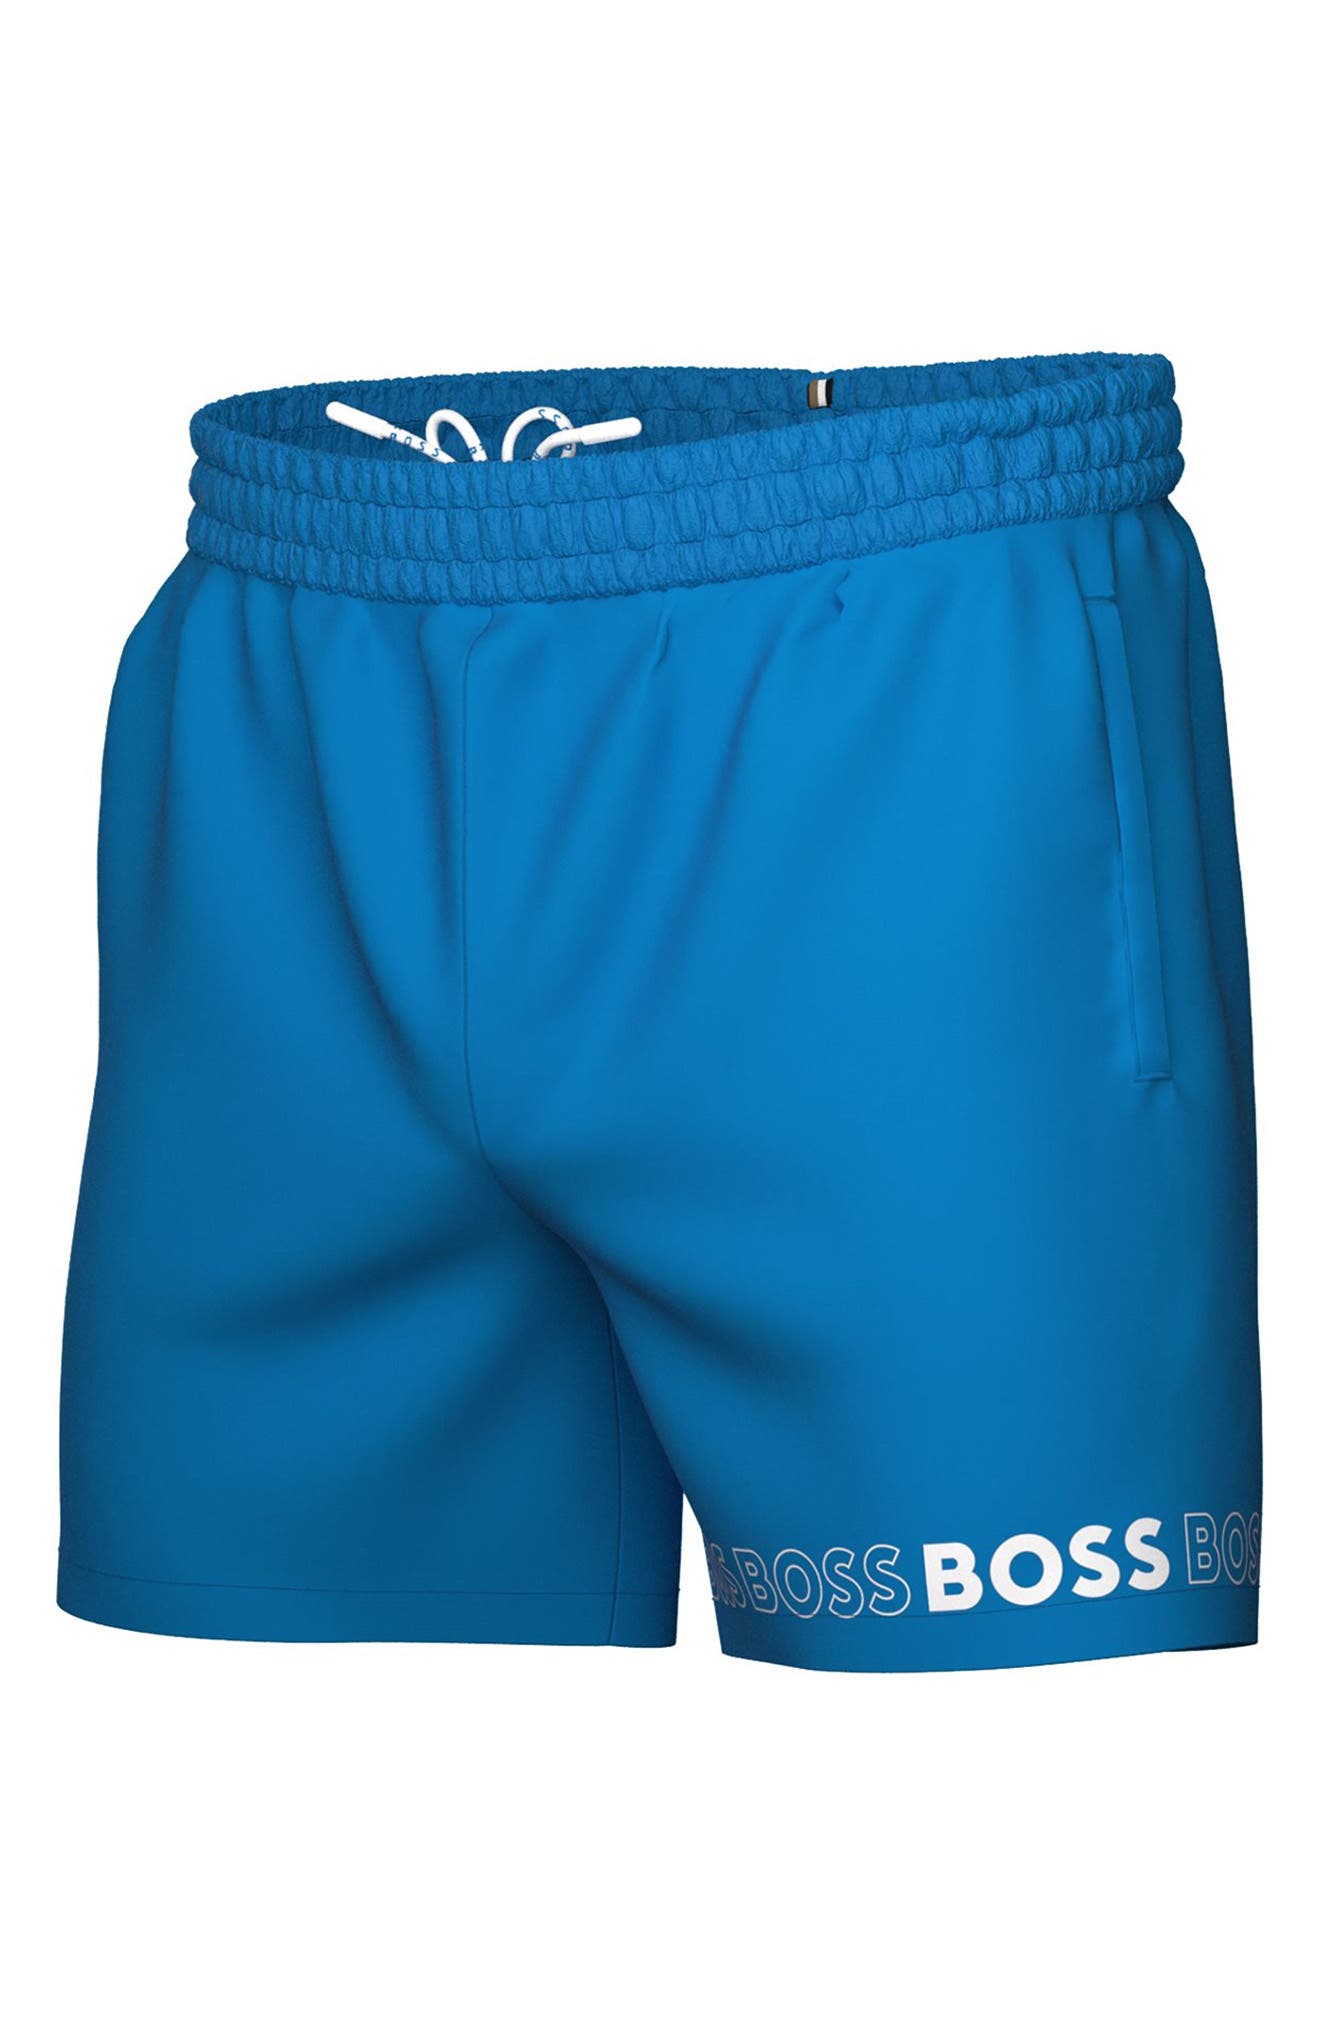 Boy Board Shorts Swimwear Adjustable Waist Pocket Swim Trunk Blue Dolphin 